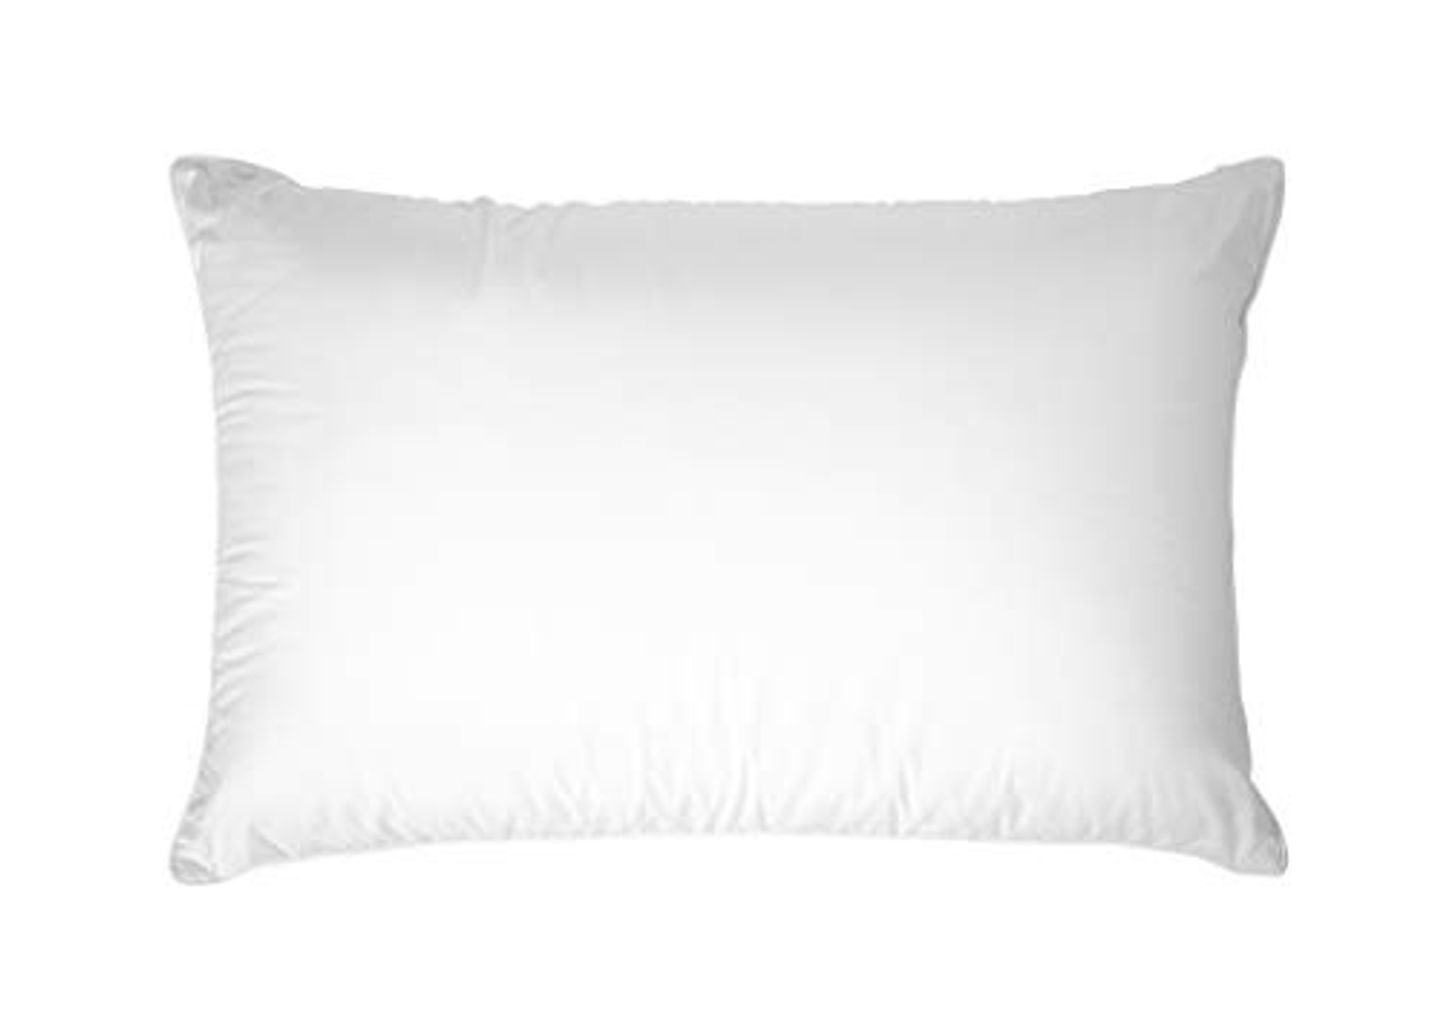 Best Western Dream Maker Pillow Best Western Dream Maker Pillow Found in Many Best Western Hotels King Set of 2